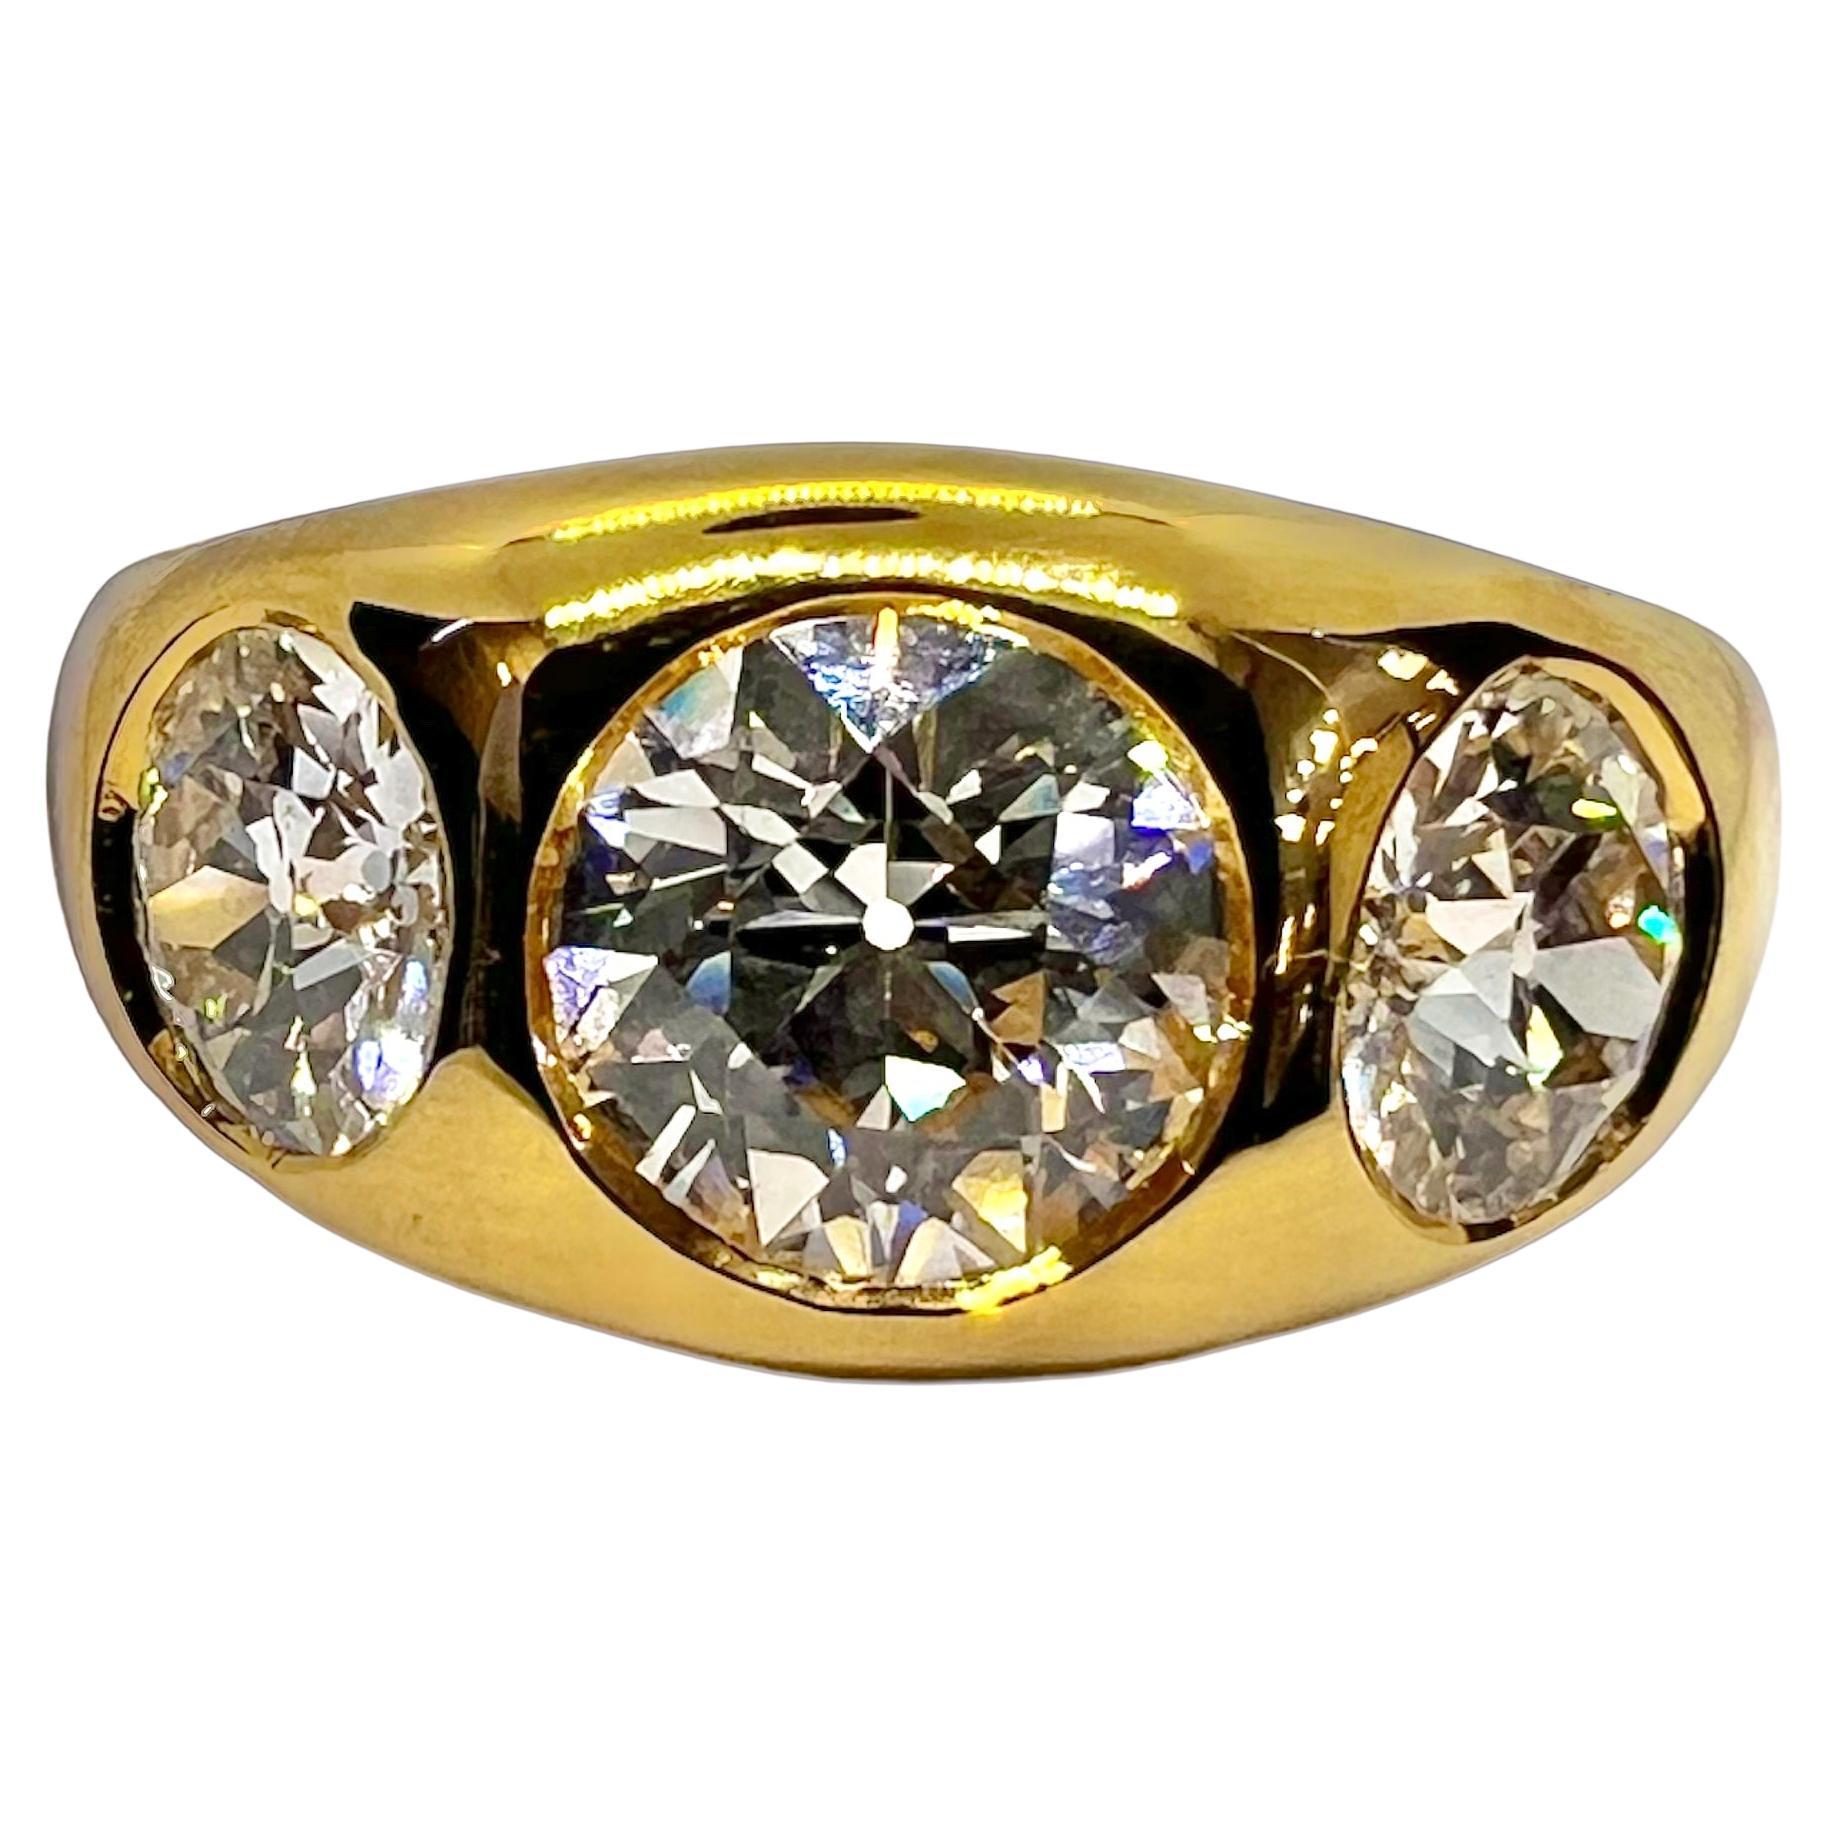 Sophia D. 1.30 Carat Diamond Ring in 18K Yellow Gold